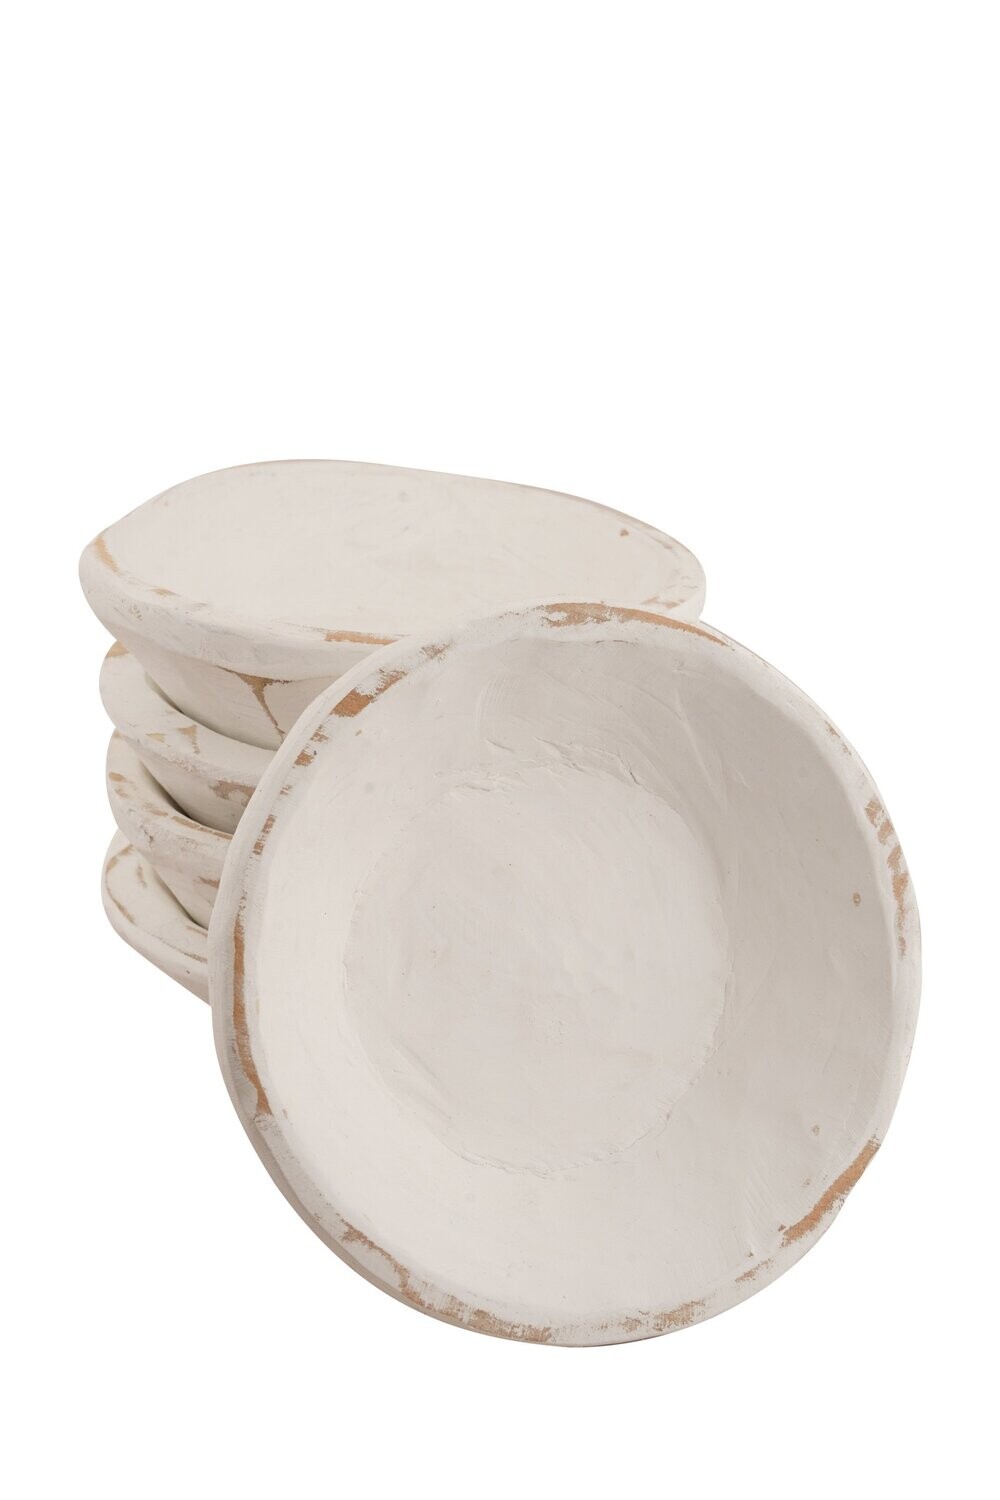 Round Wooden Dough Bowl-Medium-10-12 inch-Home Decor #2